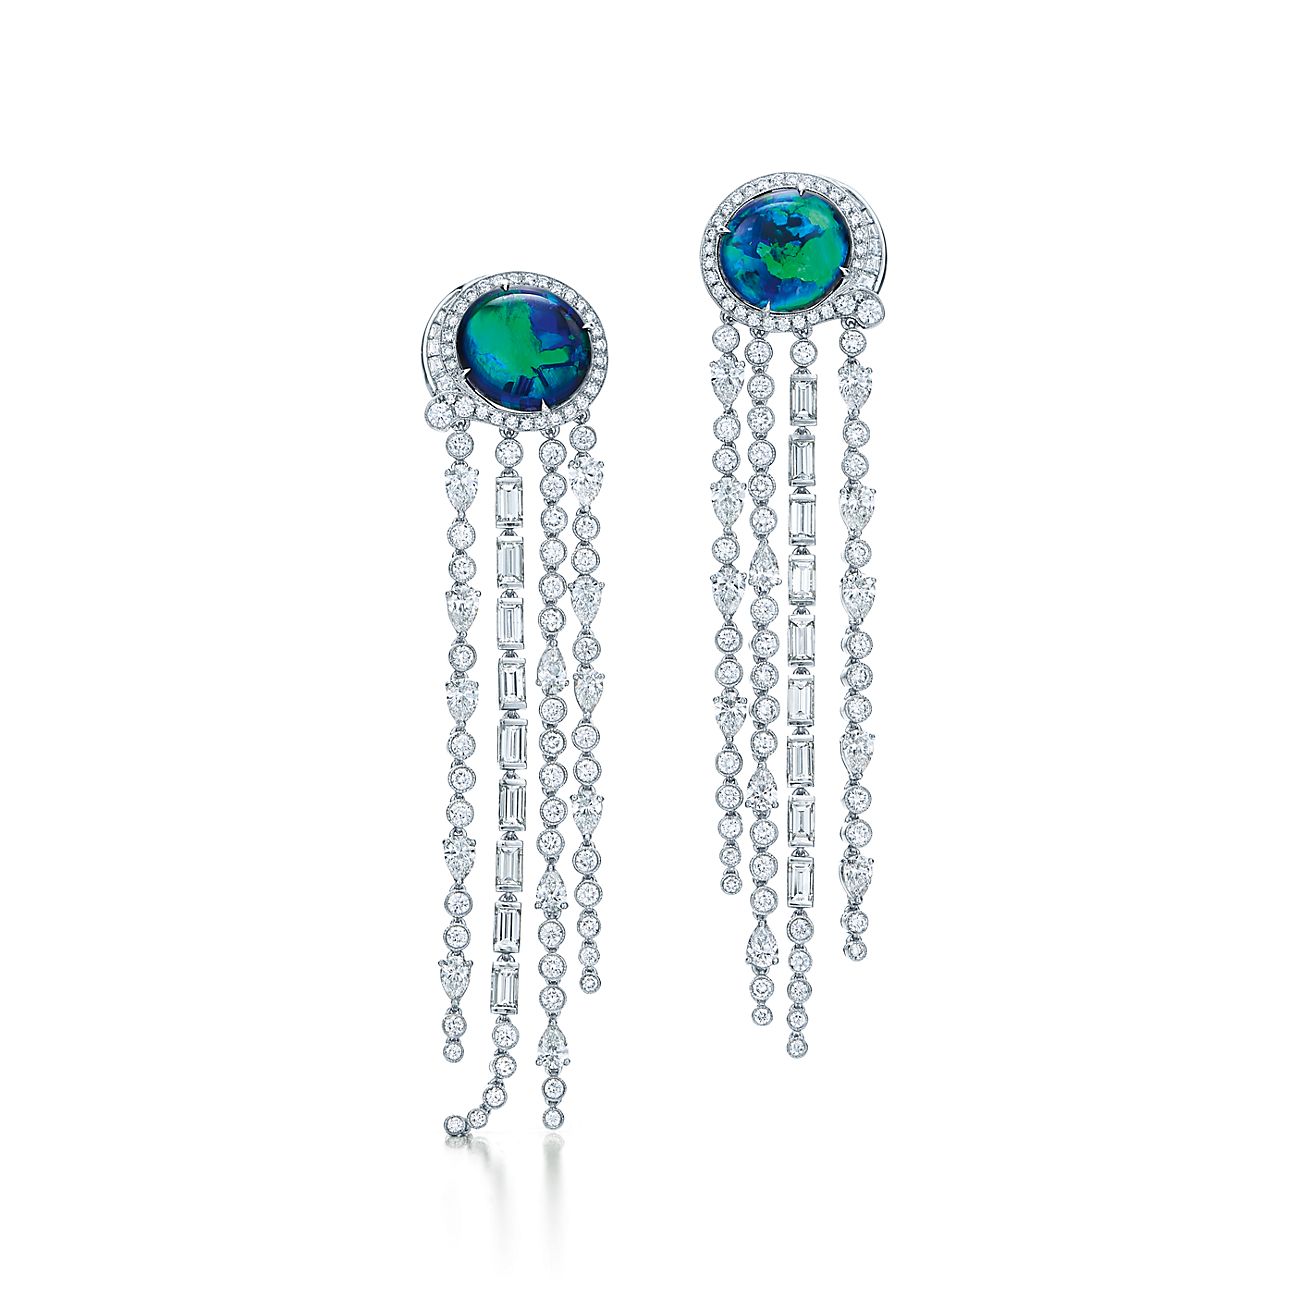 Black opal earrings in platinum with 